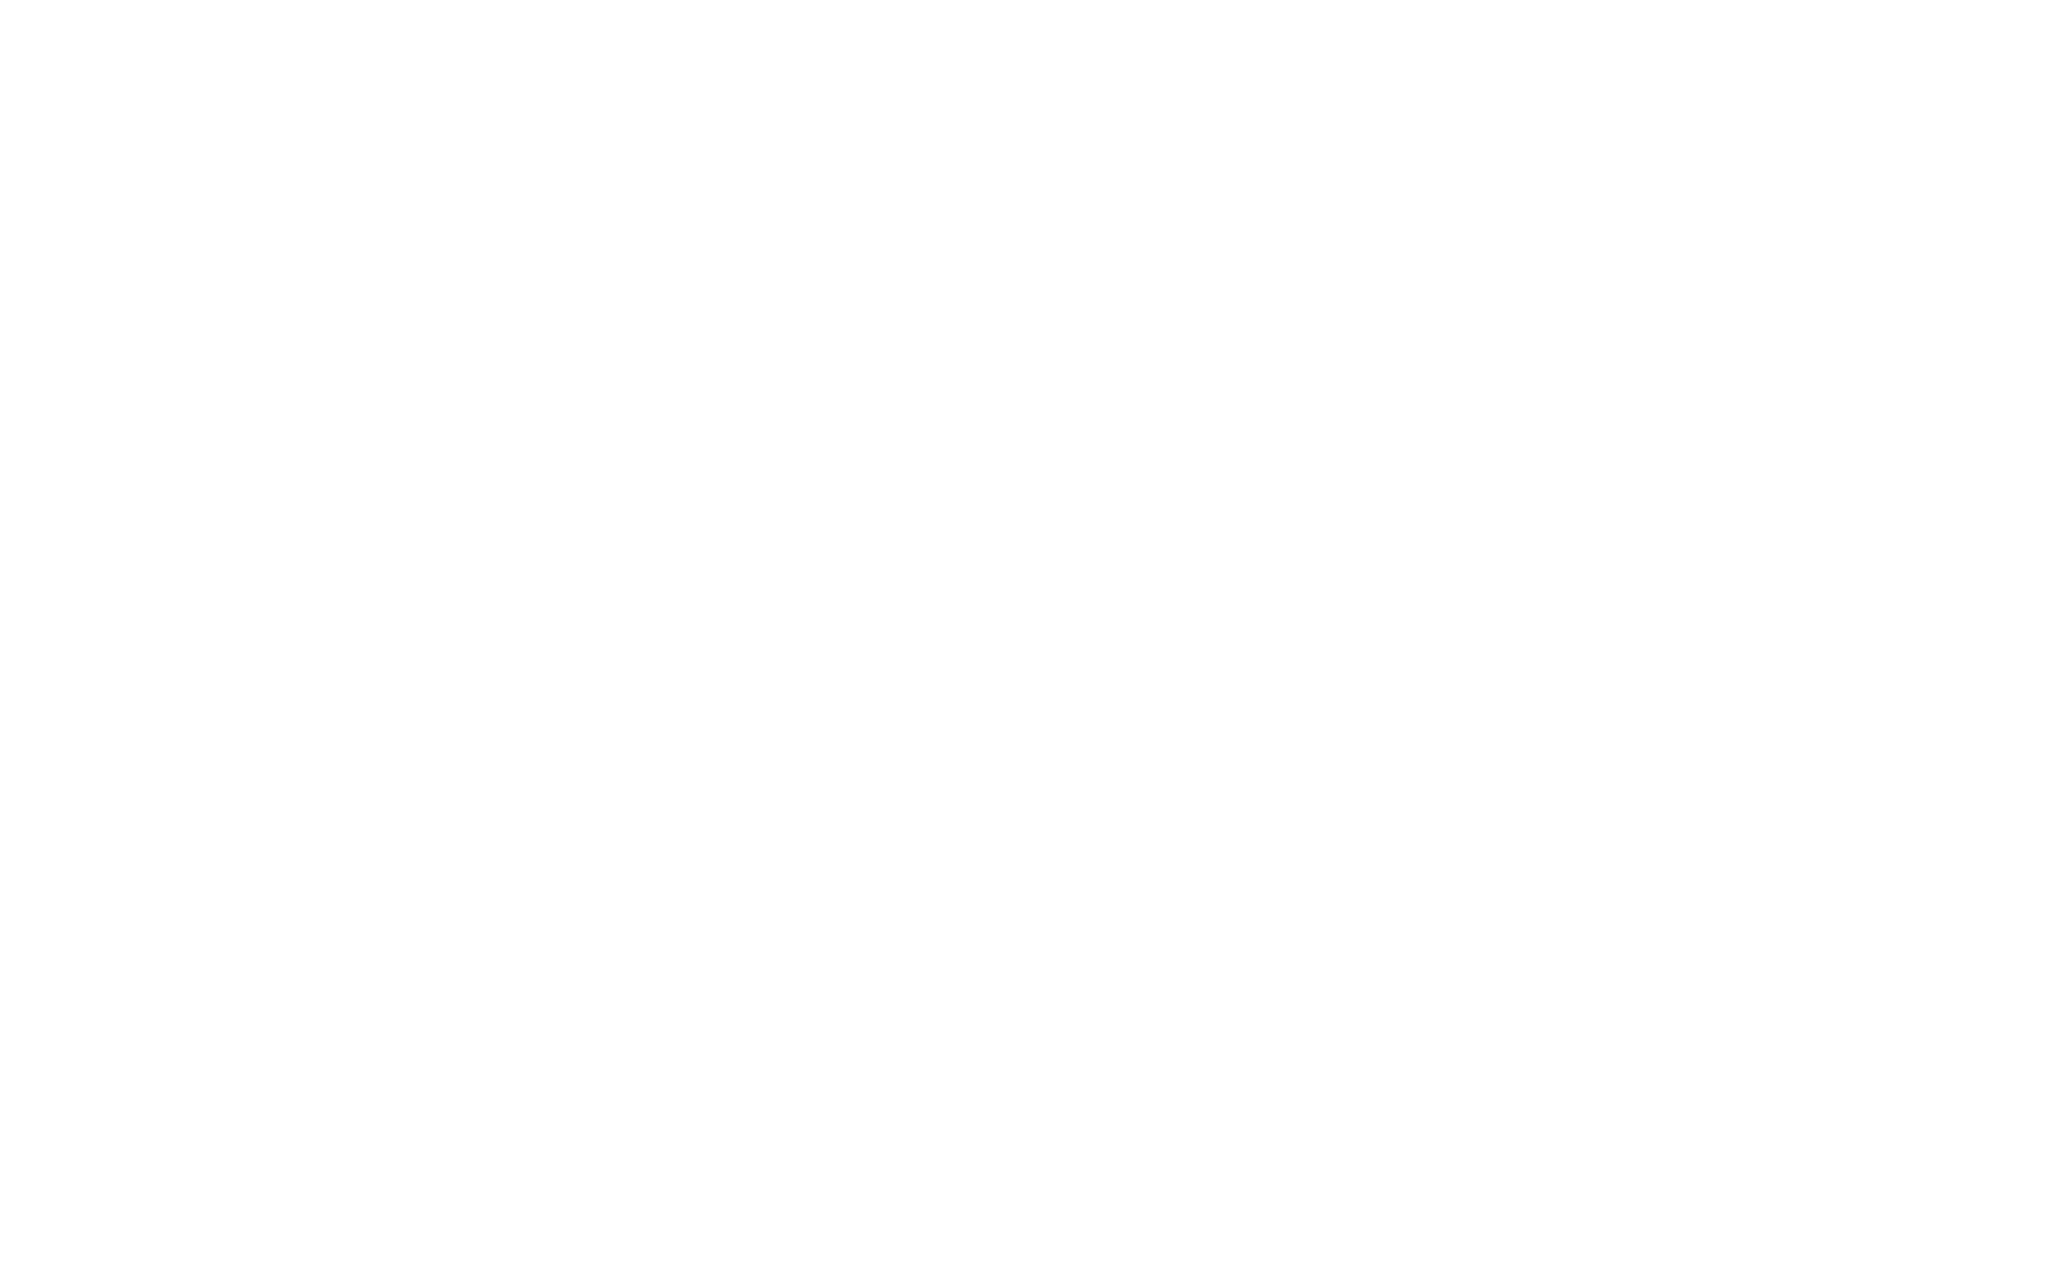 New York – Israel Business Alliance